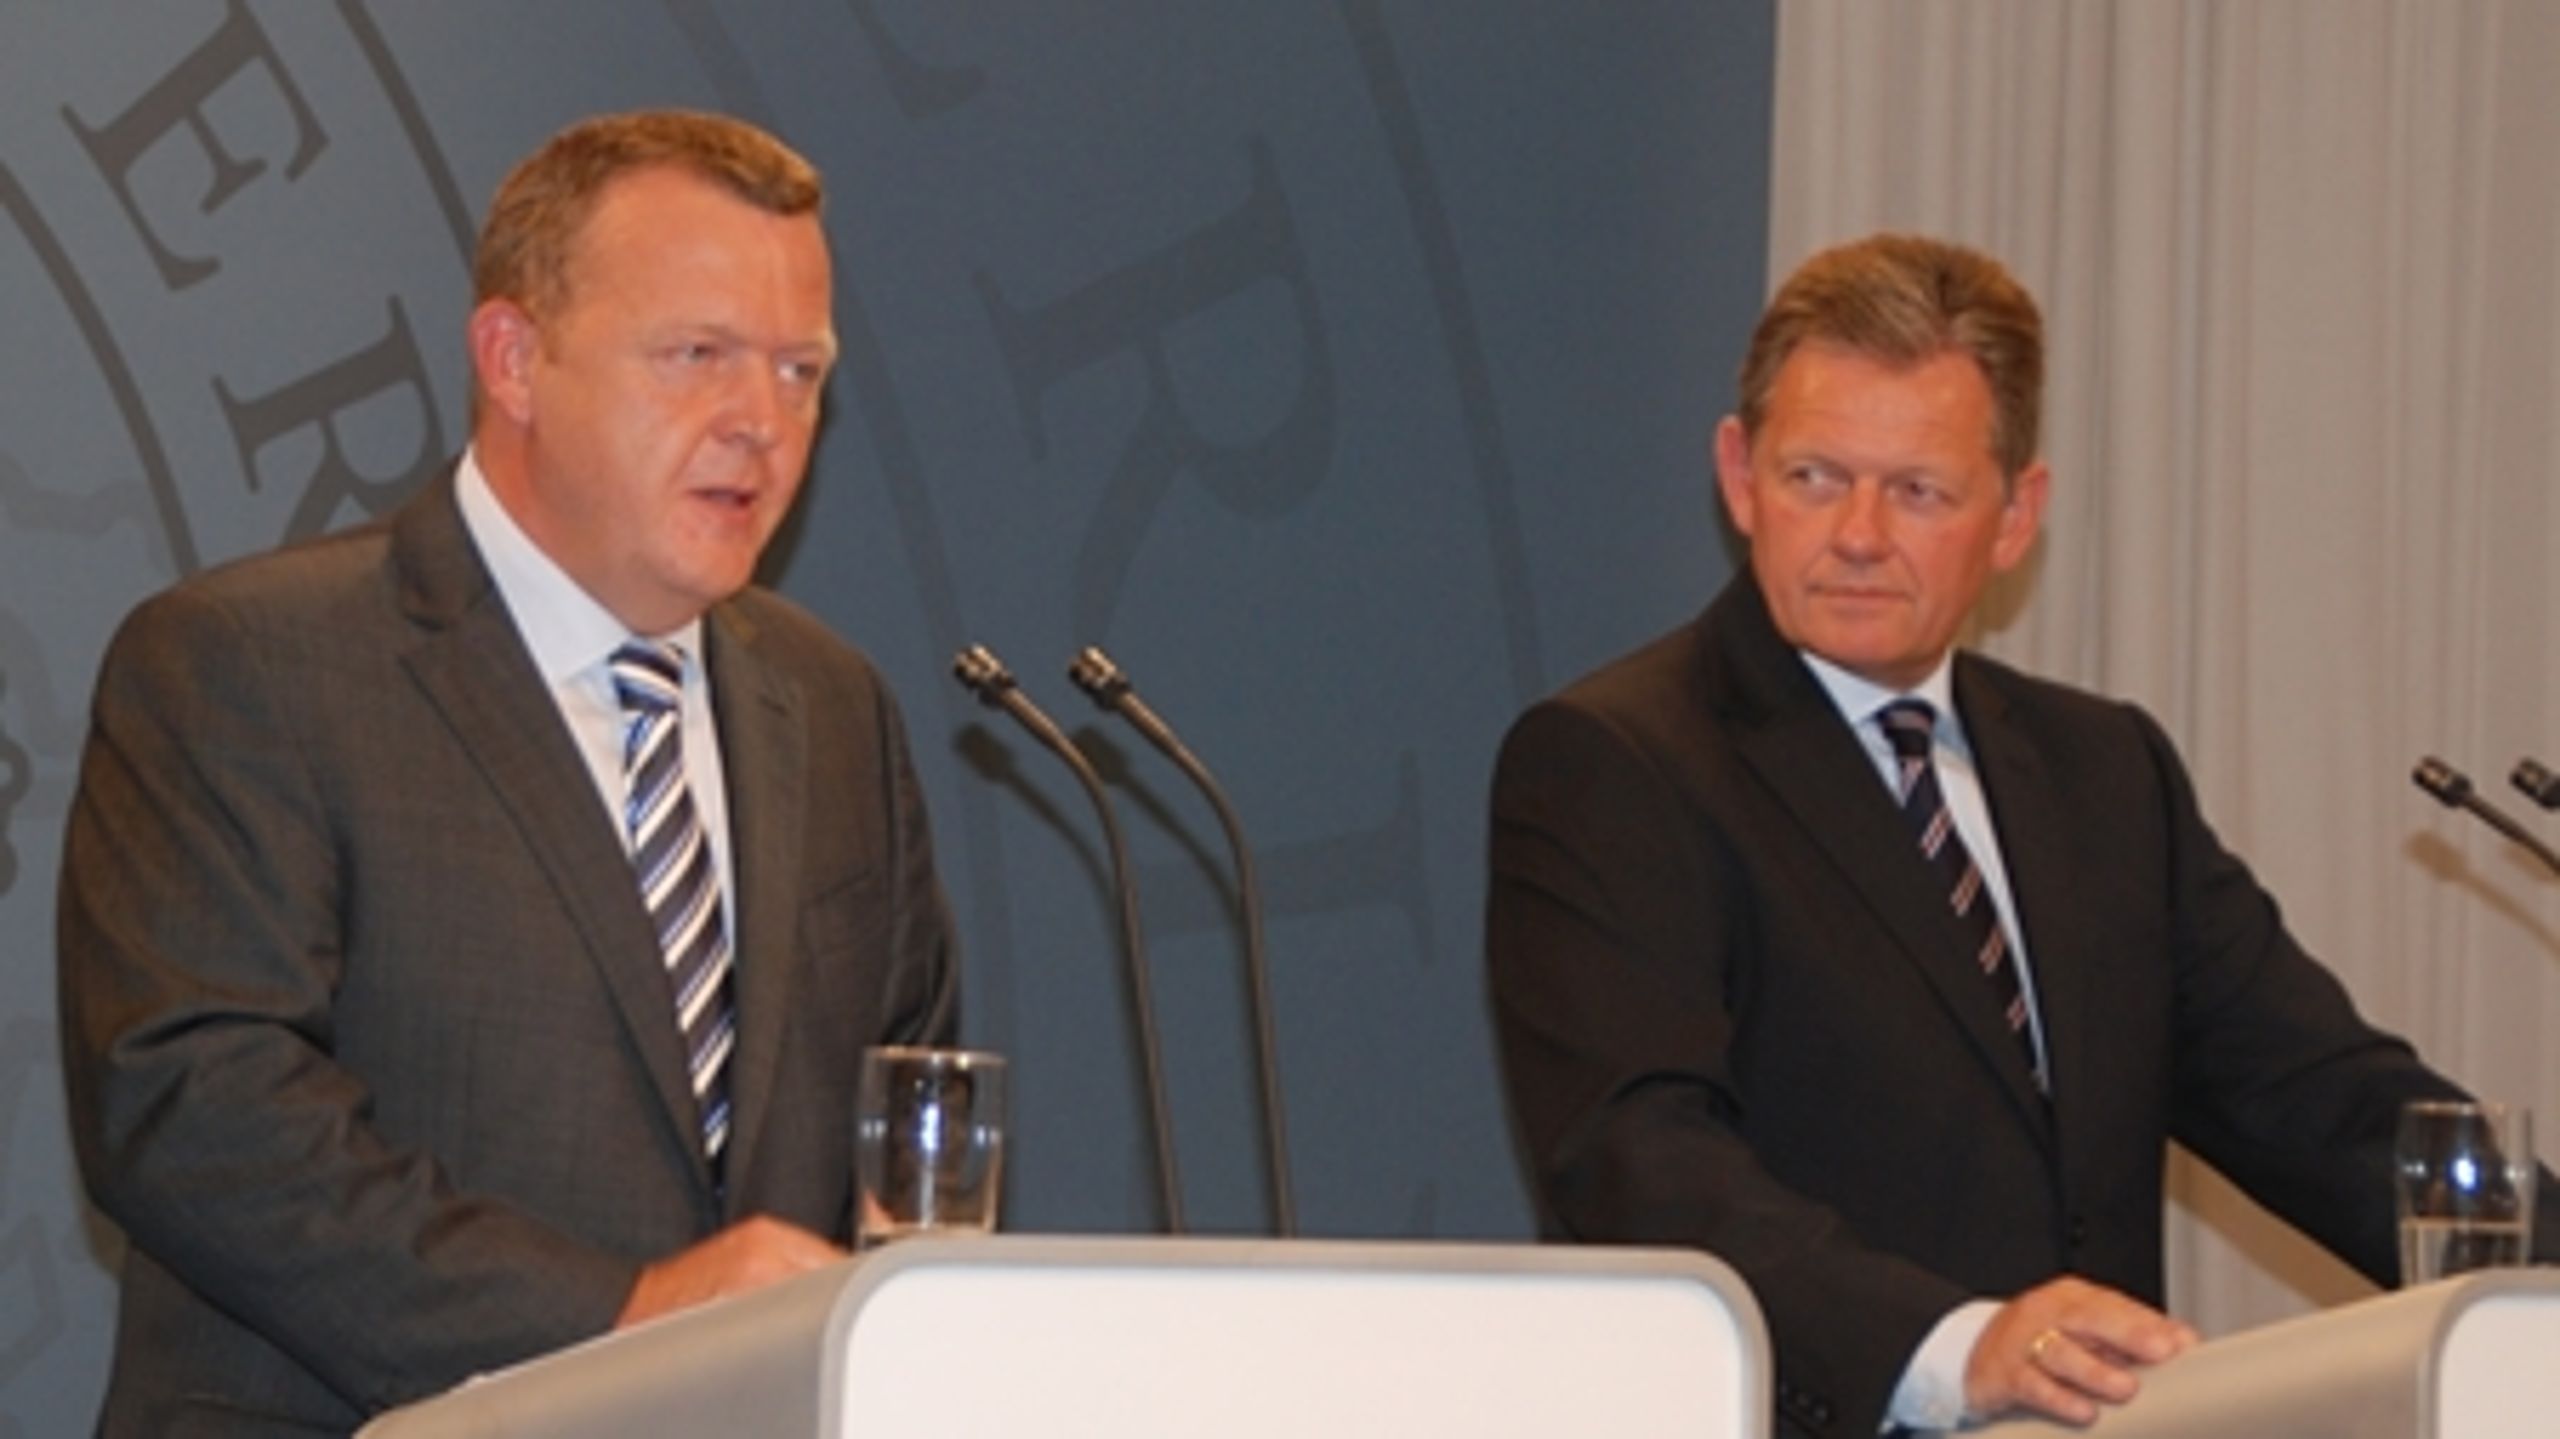 De nuværende meningsmålinger er et sandt drømmescenarie for Lars Løkke Rasmussen og Venstre.